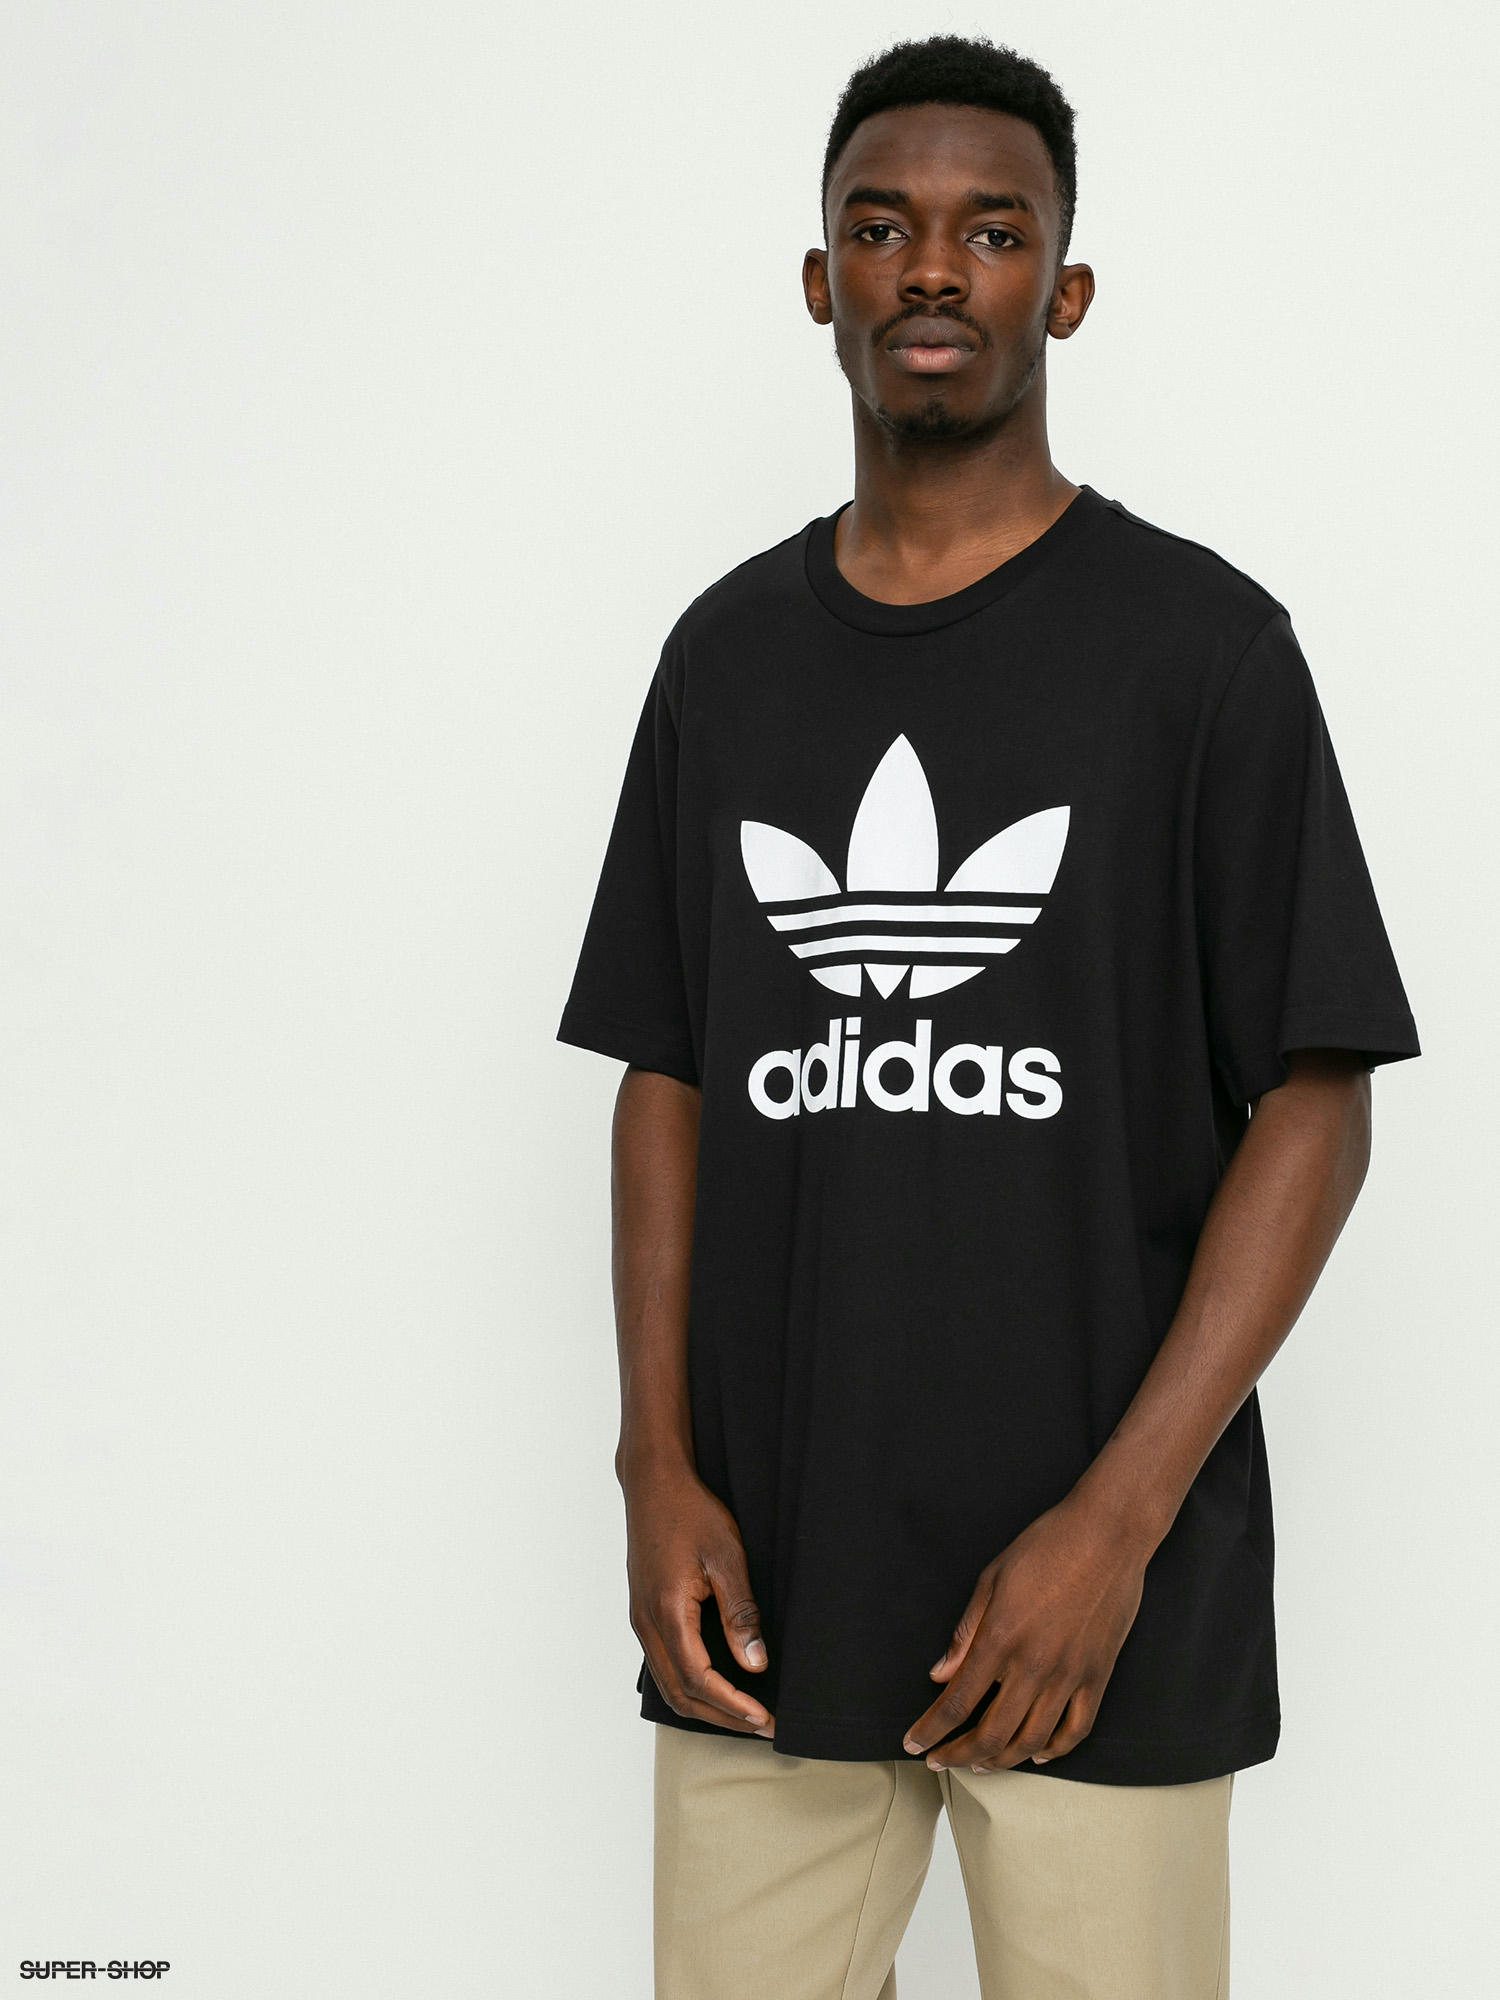 adidas Originals (black/white) Trefoil T-shirt